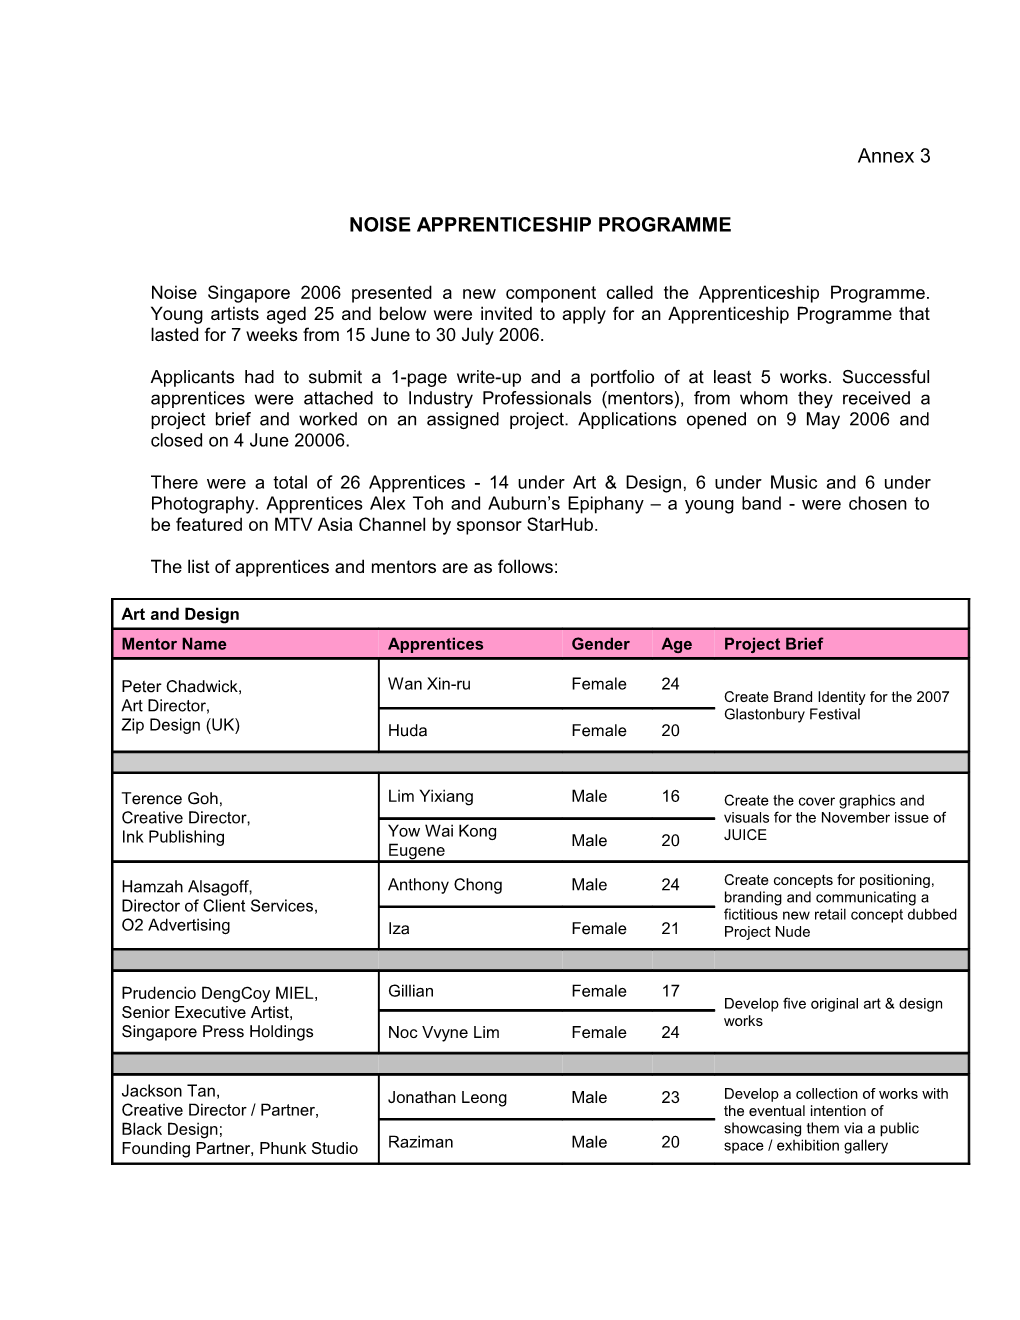 Noise Apprenticeship Programme